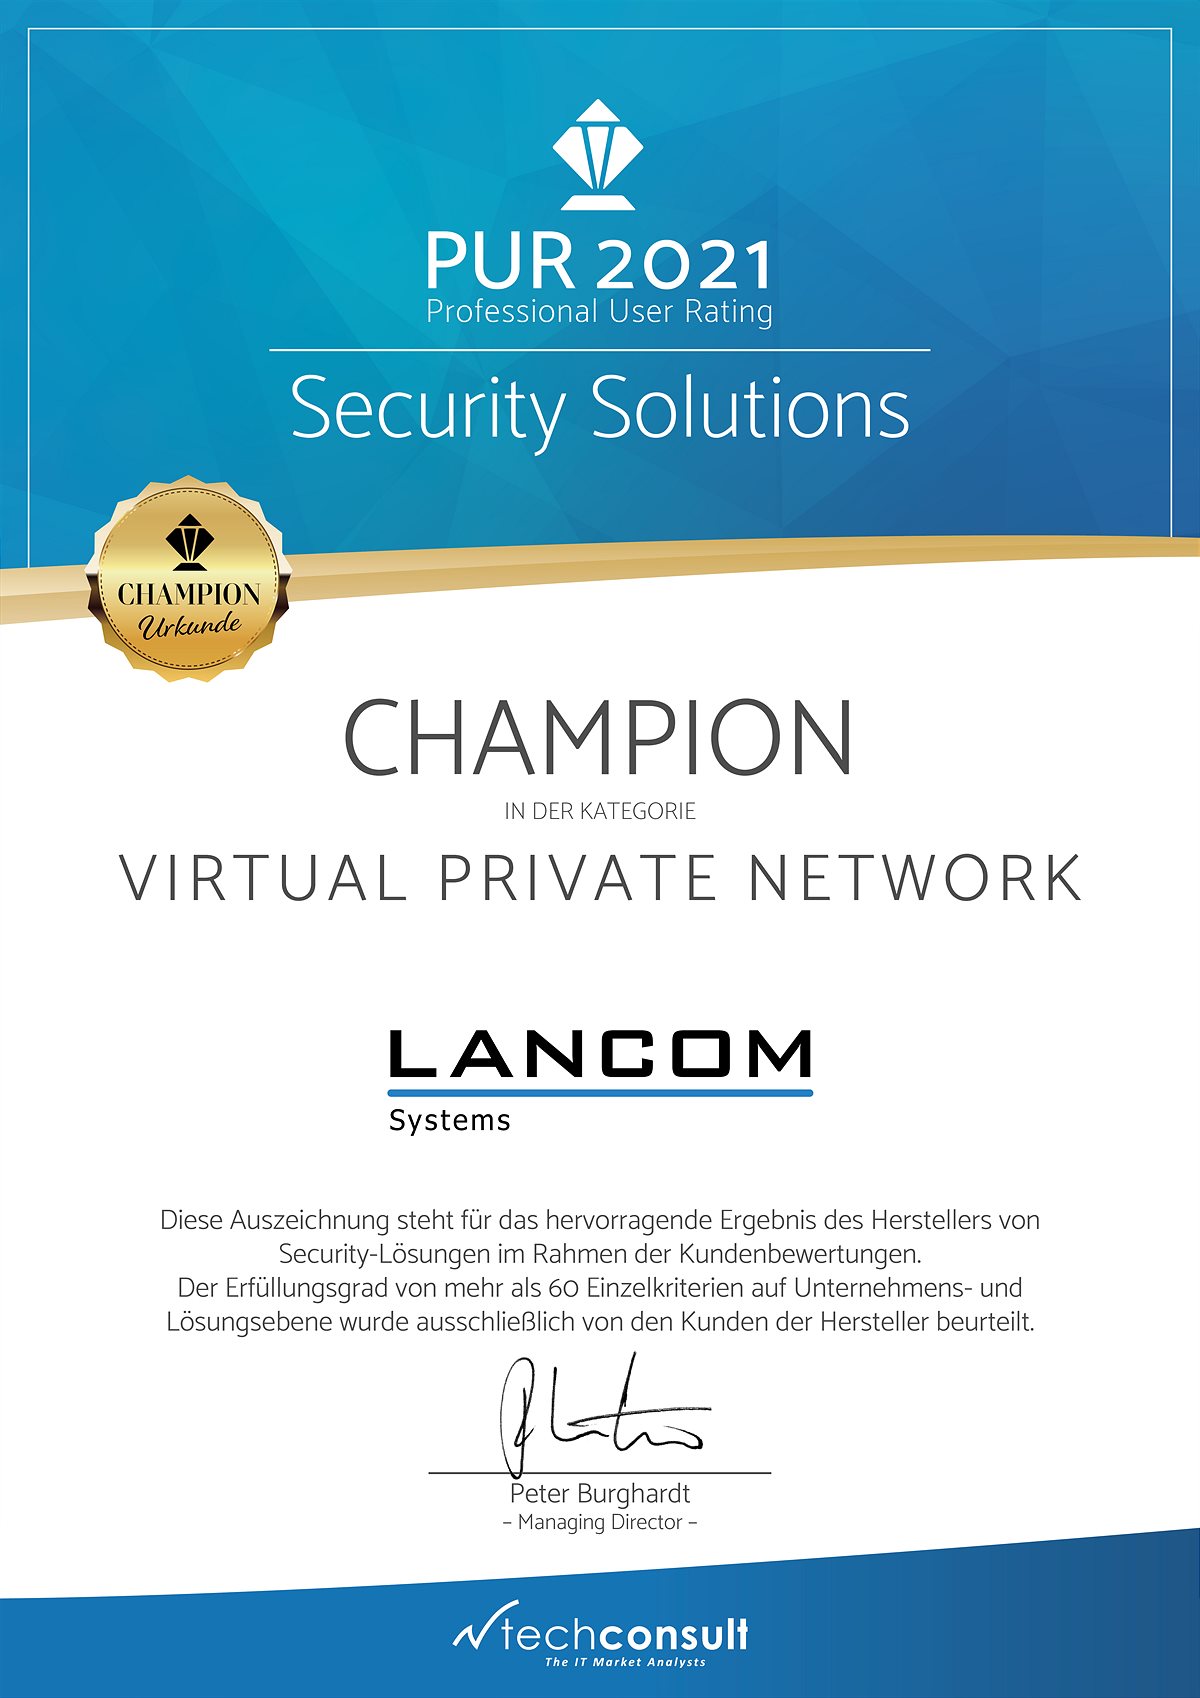 Techconsult Professional User Rating: Lancom Systems ist zum fünften Mal in Folge VPN-Champion 